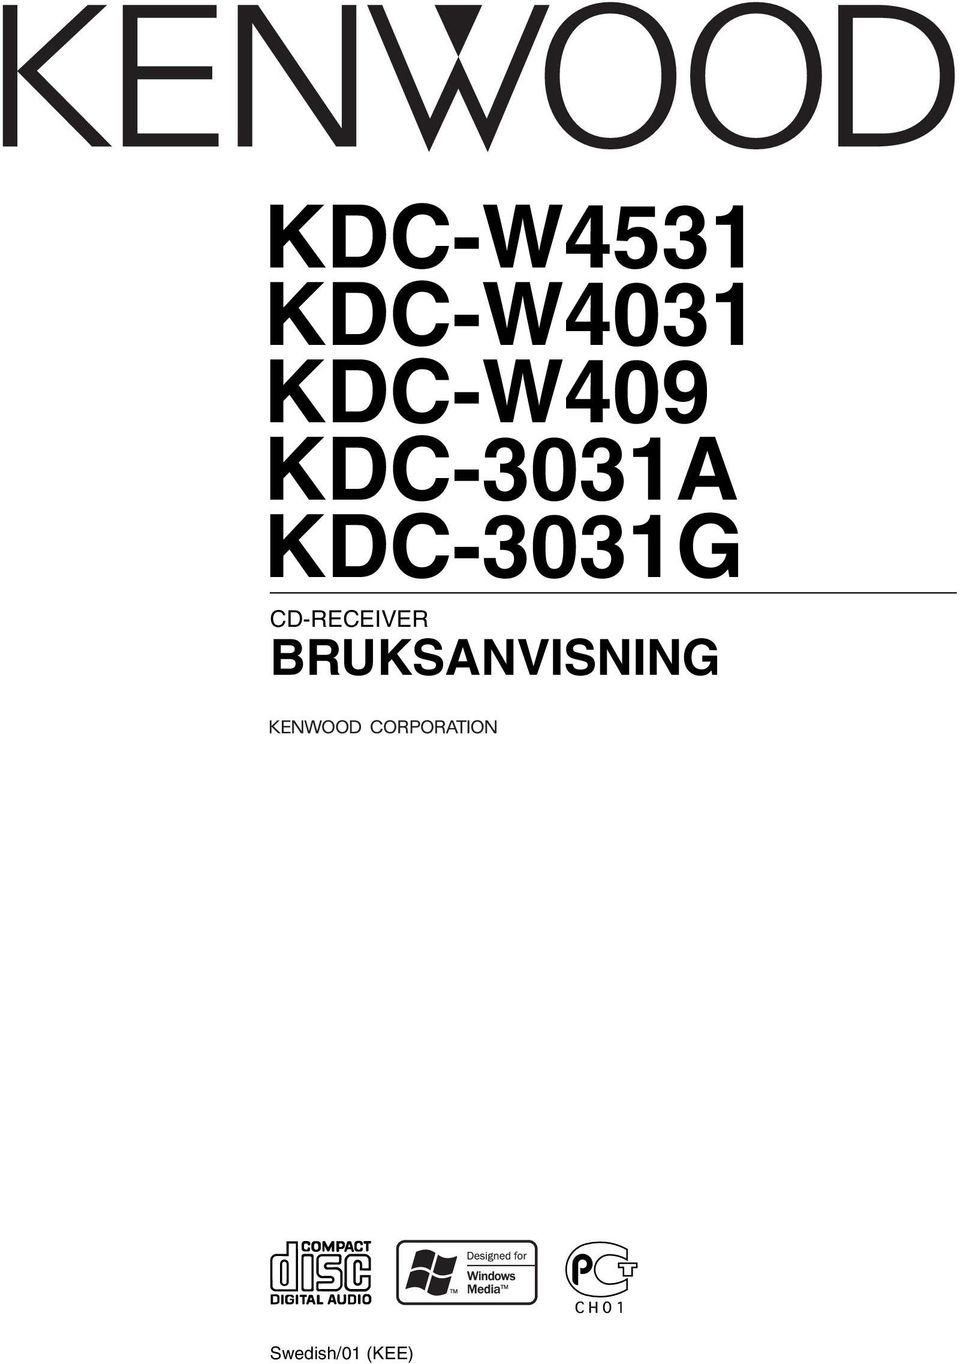 KDC-3031G CD-RECEIVER